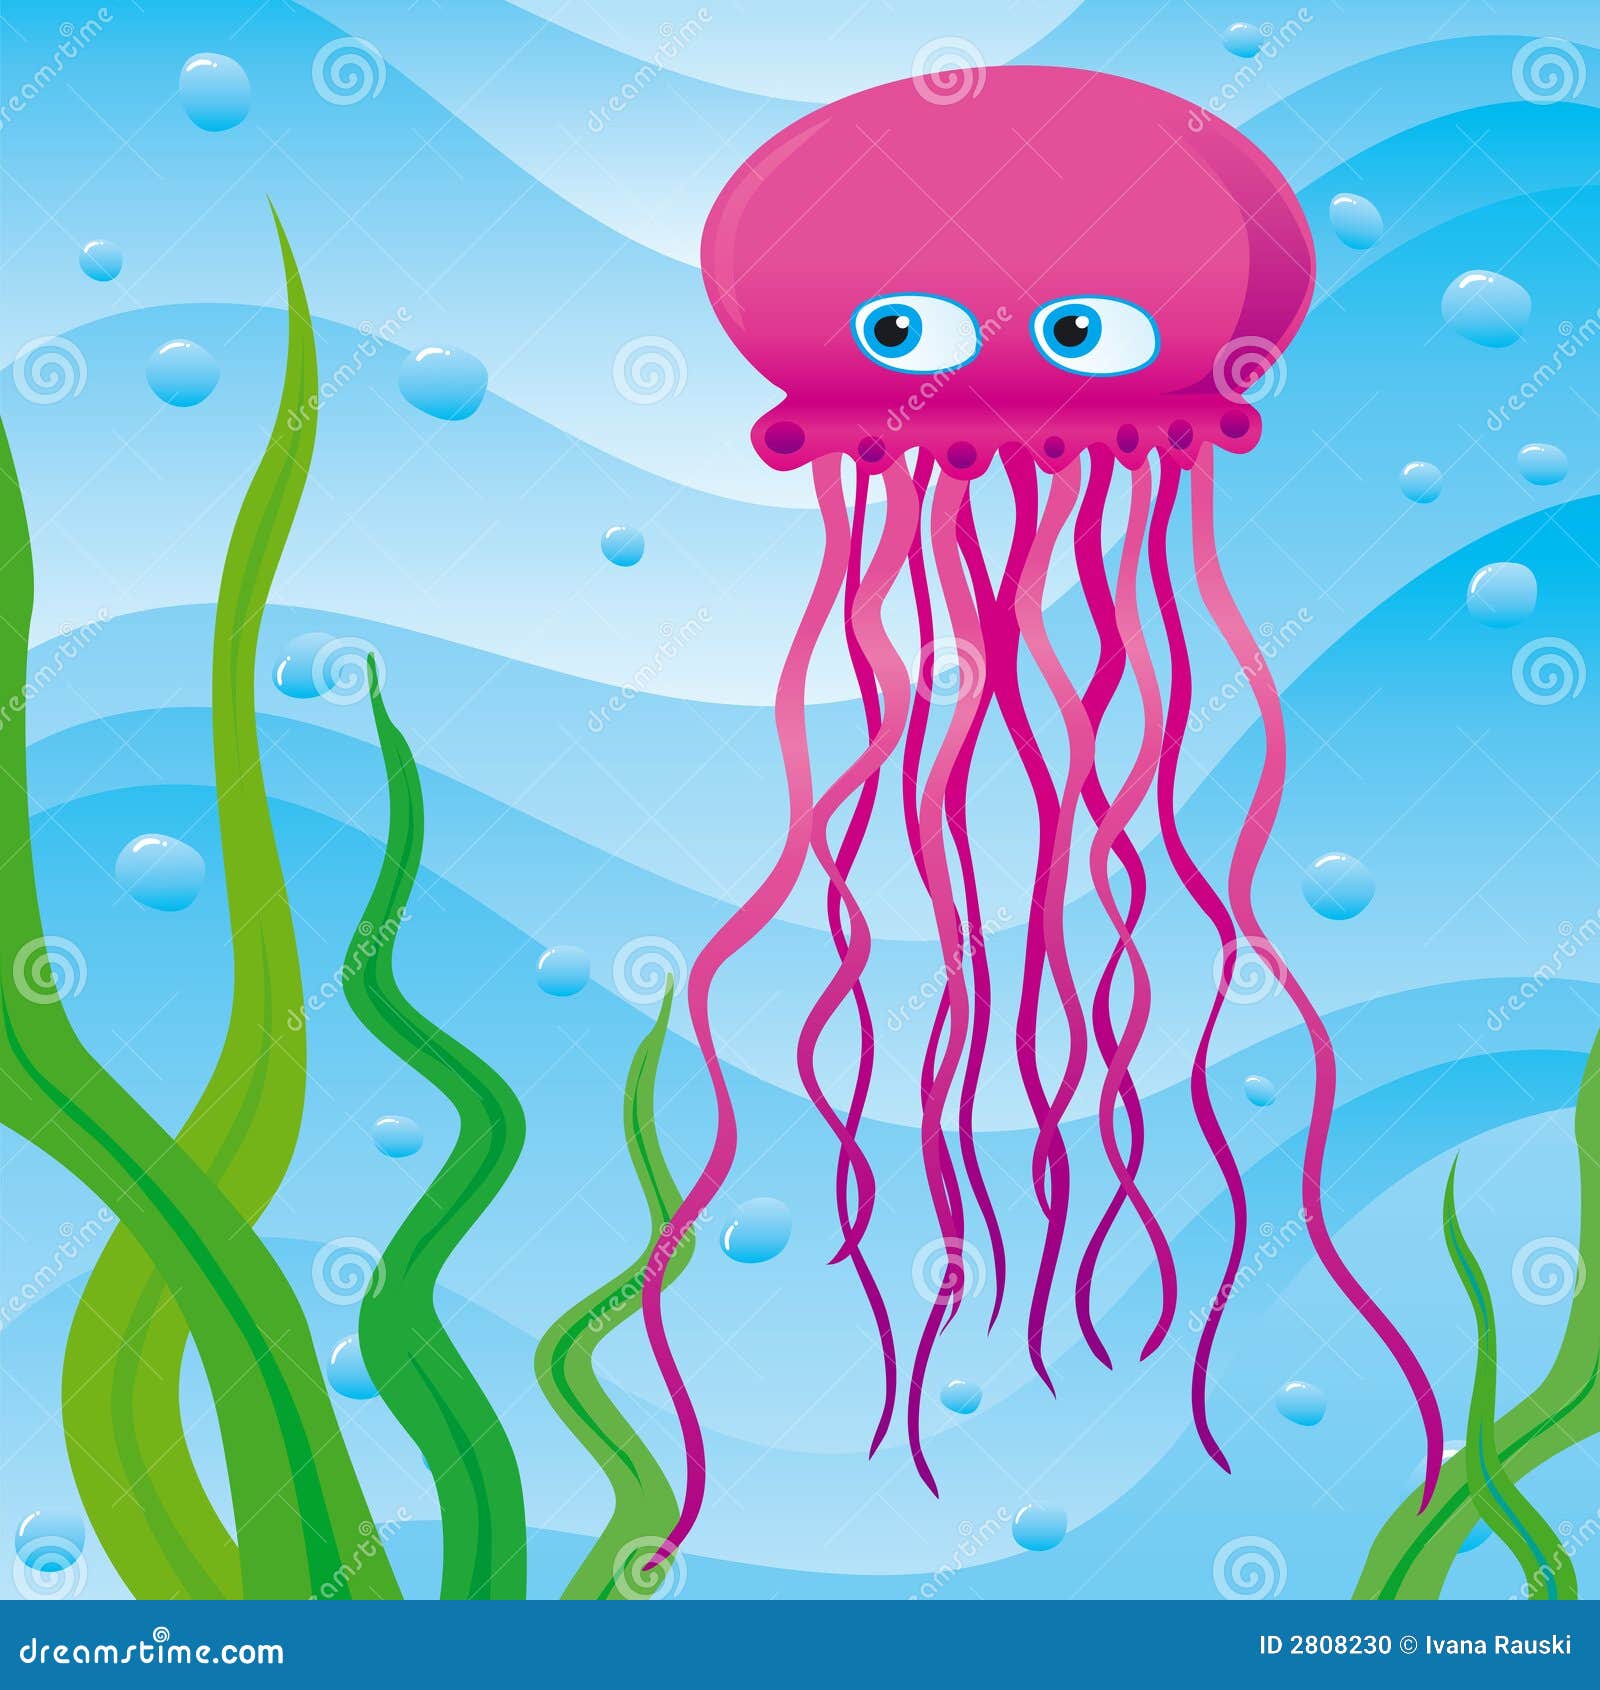 cute jellyfish clipart - photo #36